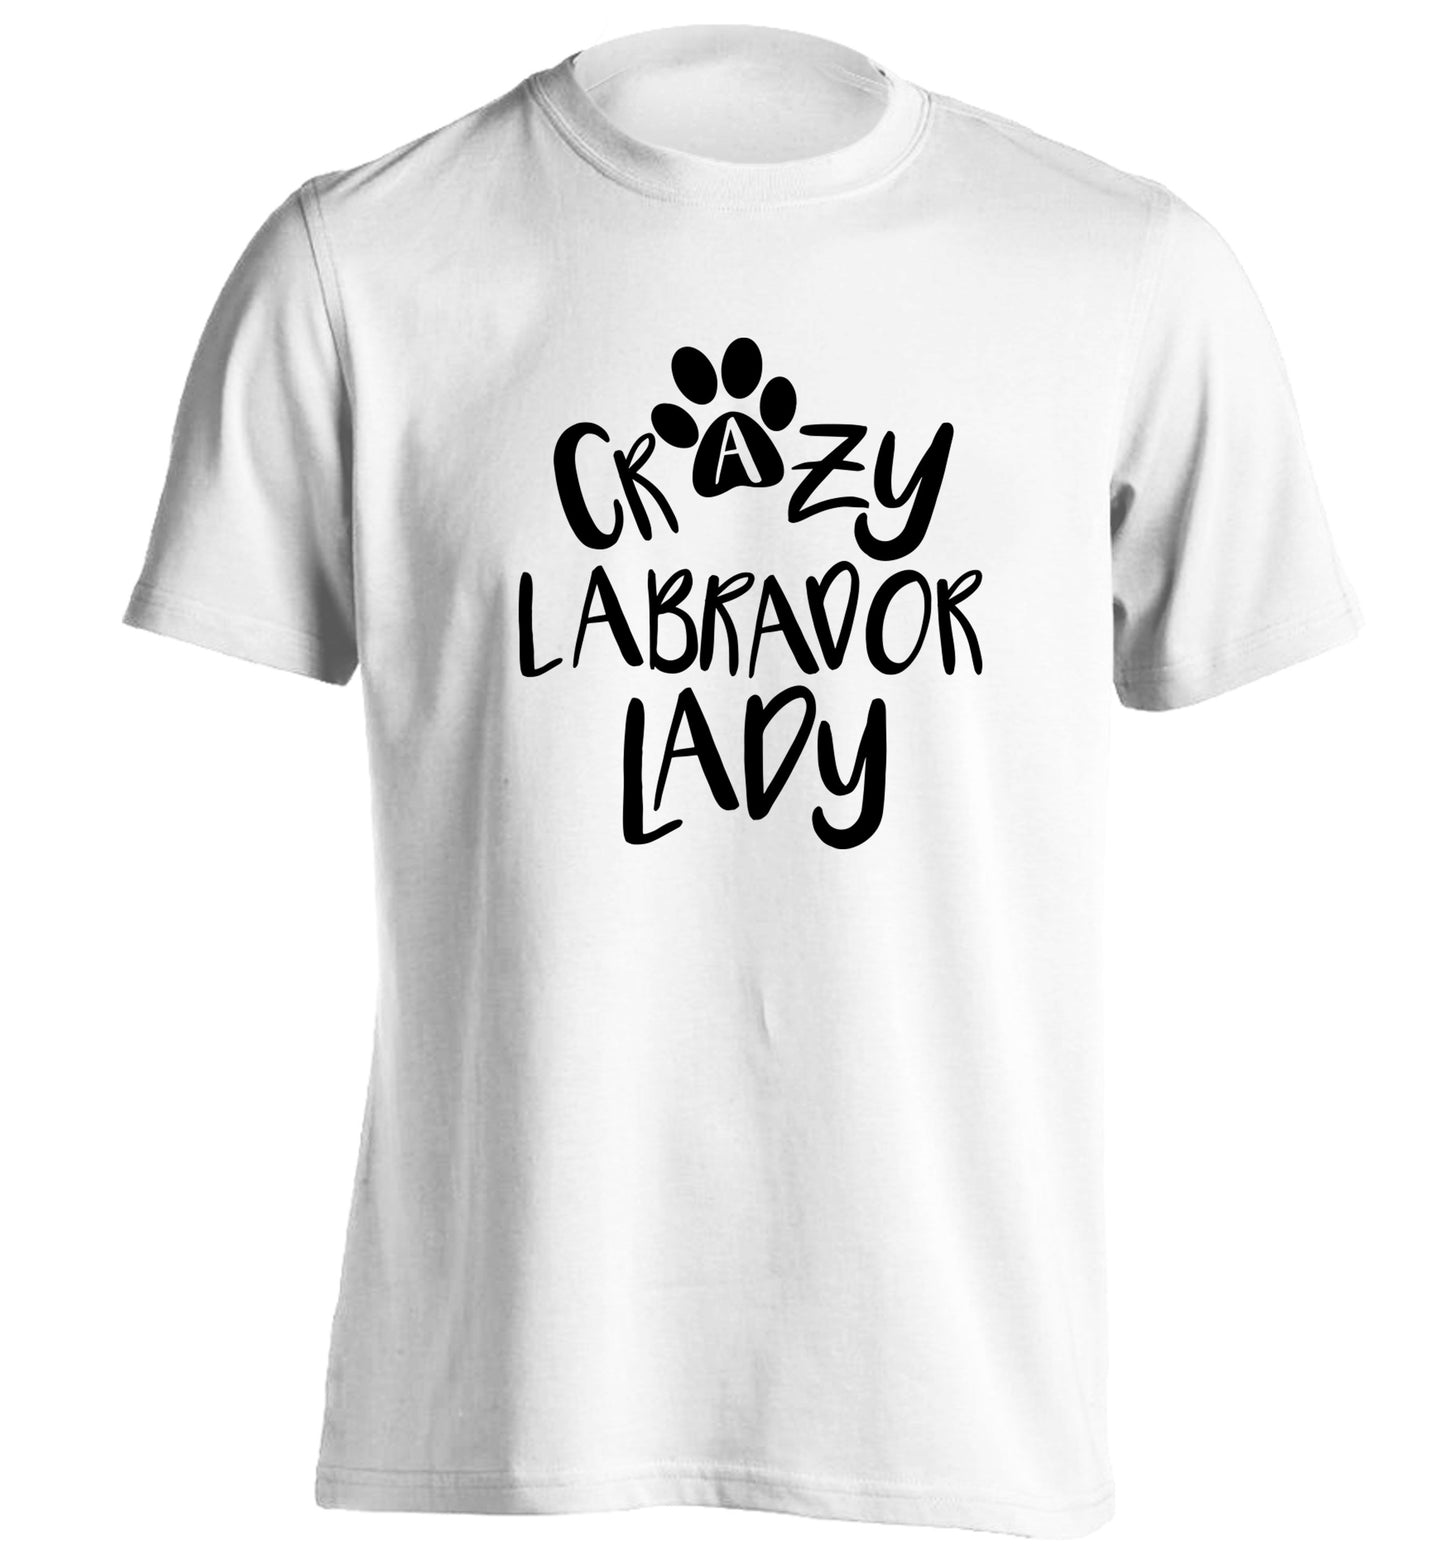 Crazy labrador lady adults unisex white Tshirt 2XL